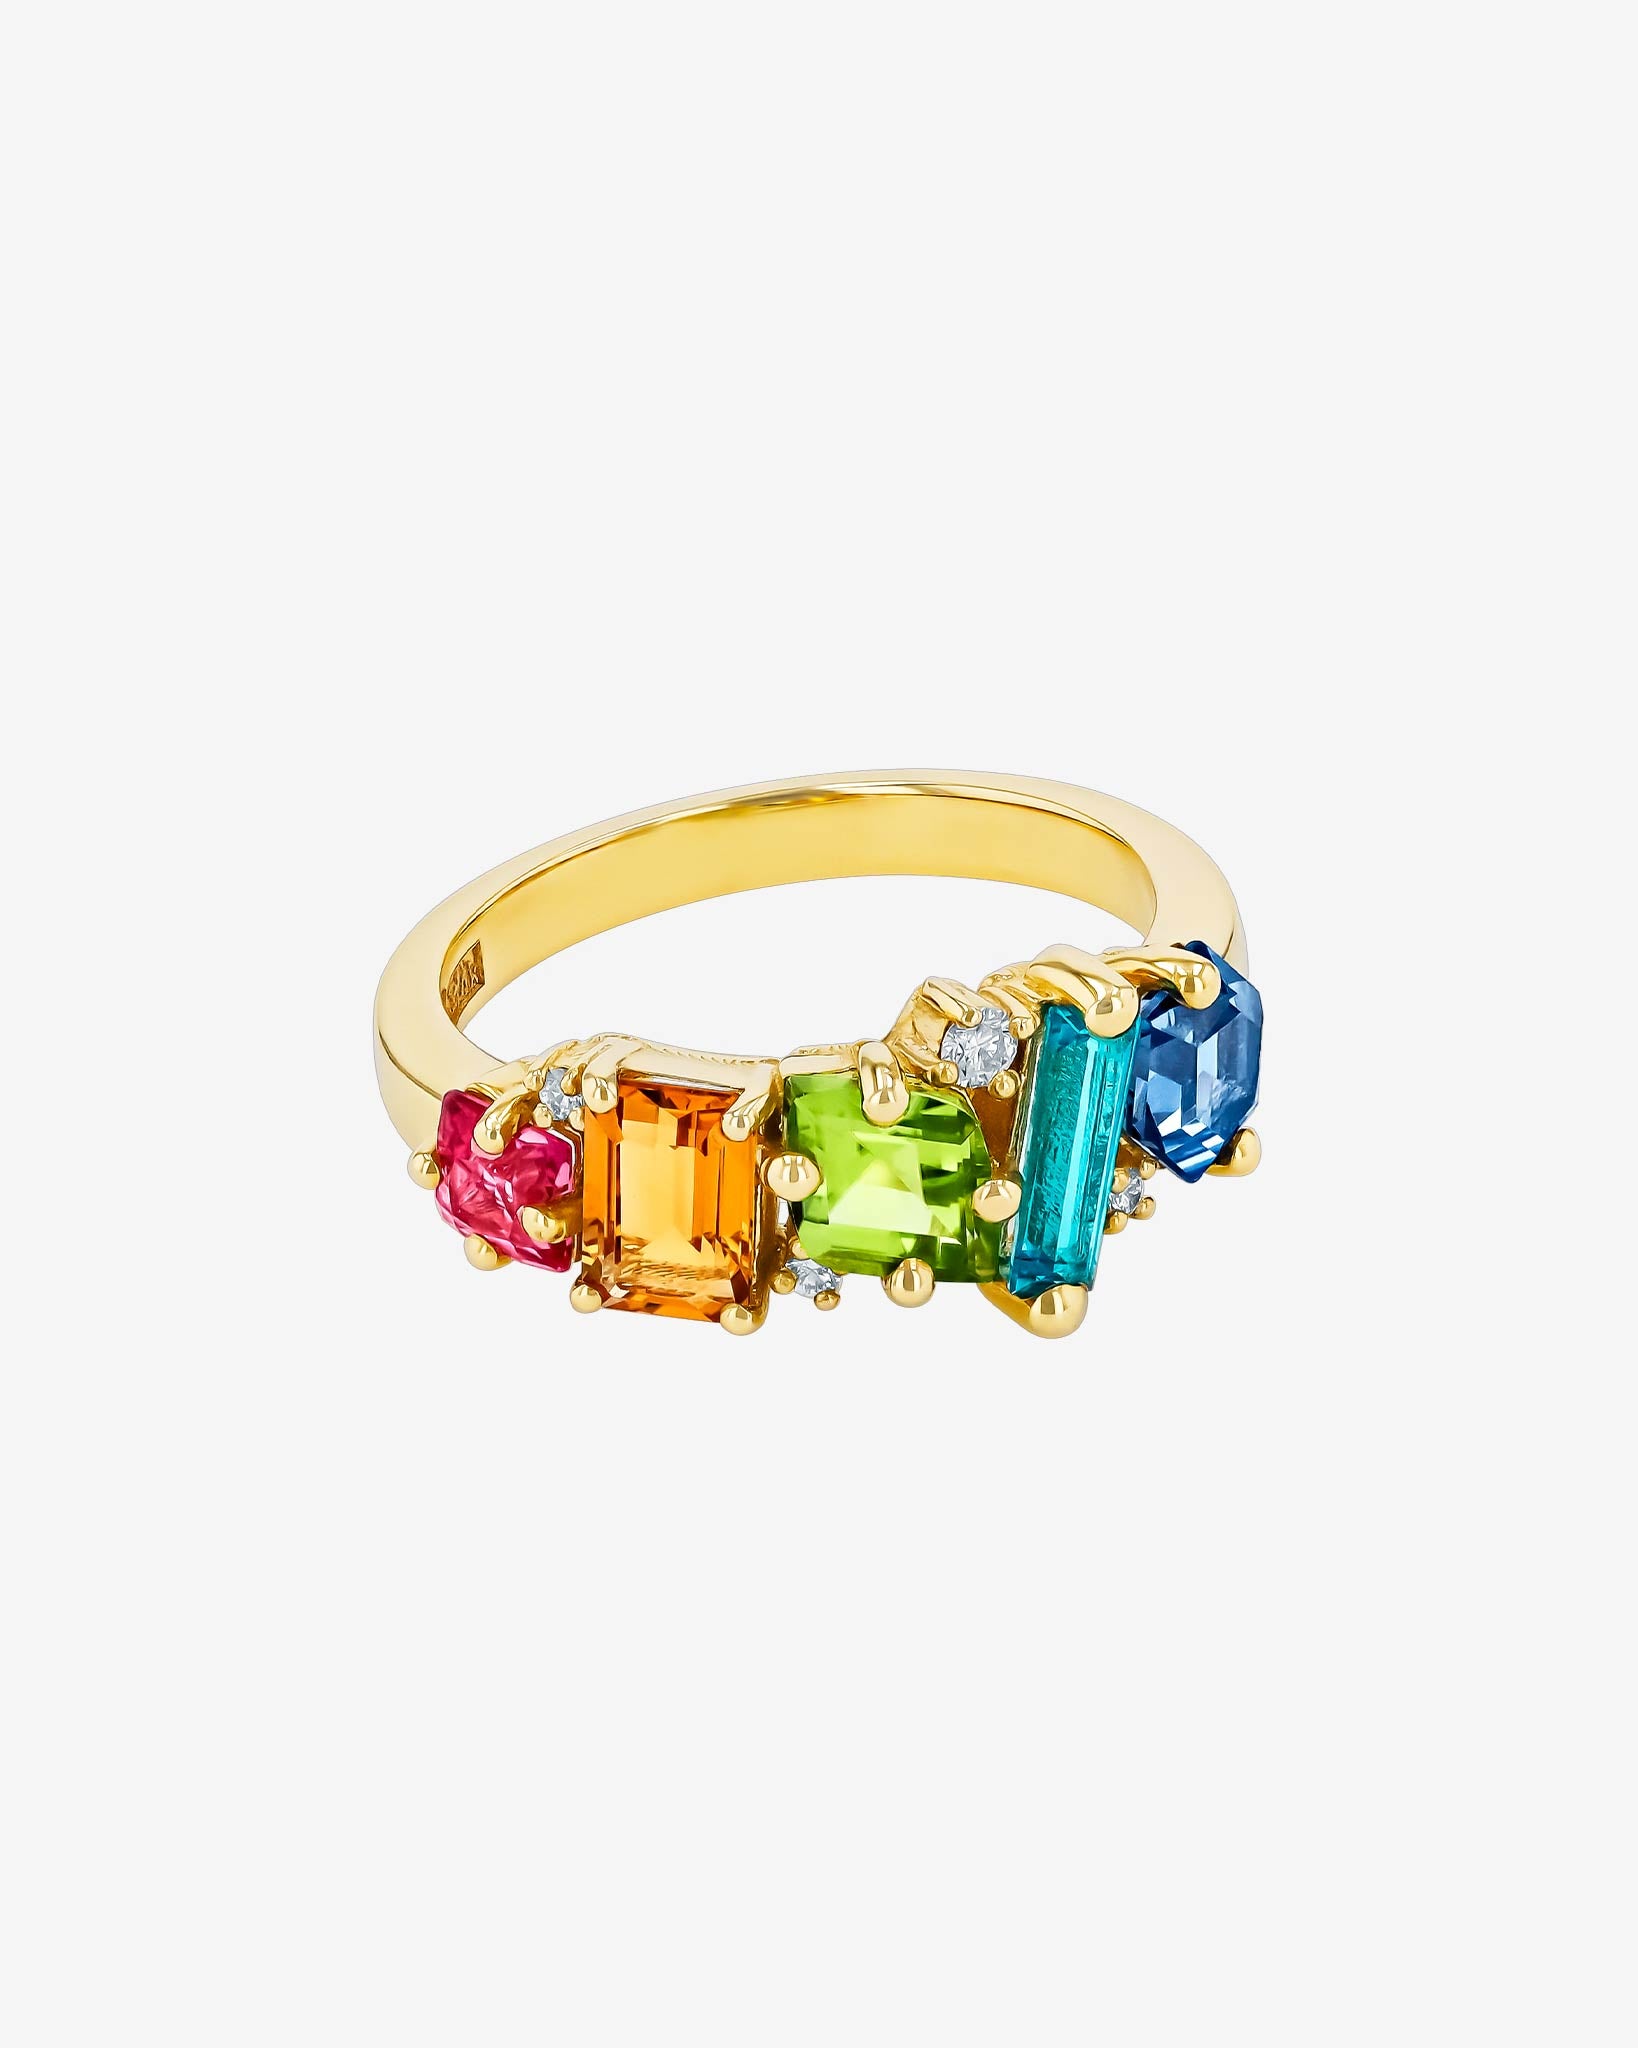 Kalan By Suzanne Kalan Nadima Rainbow Glimmer Ring in 14k yellow gold